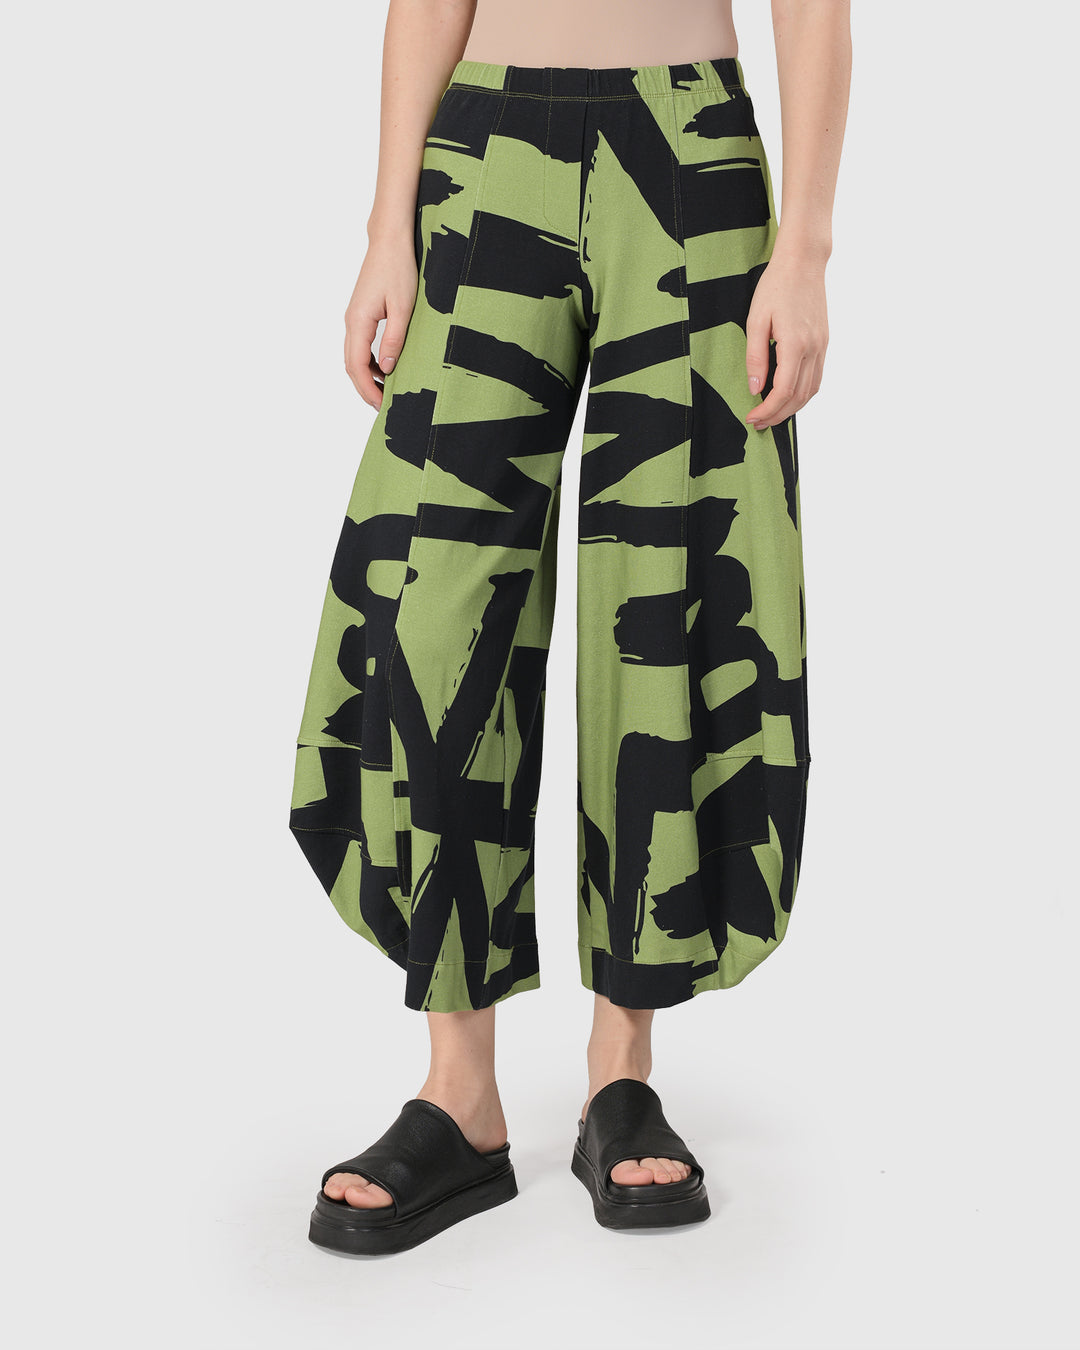 Urban Ripley Punto Pants, Green Marker